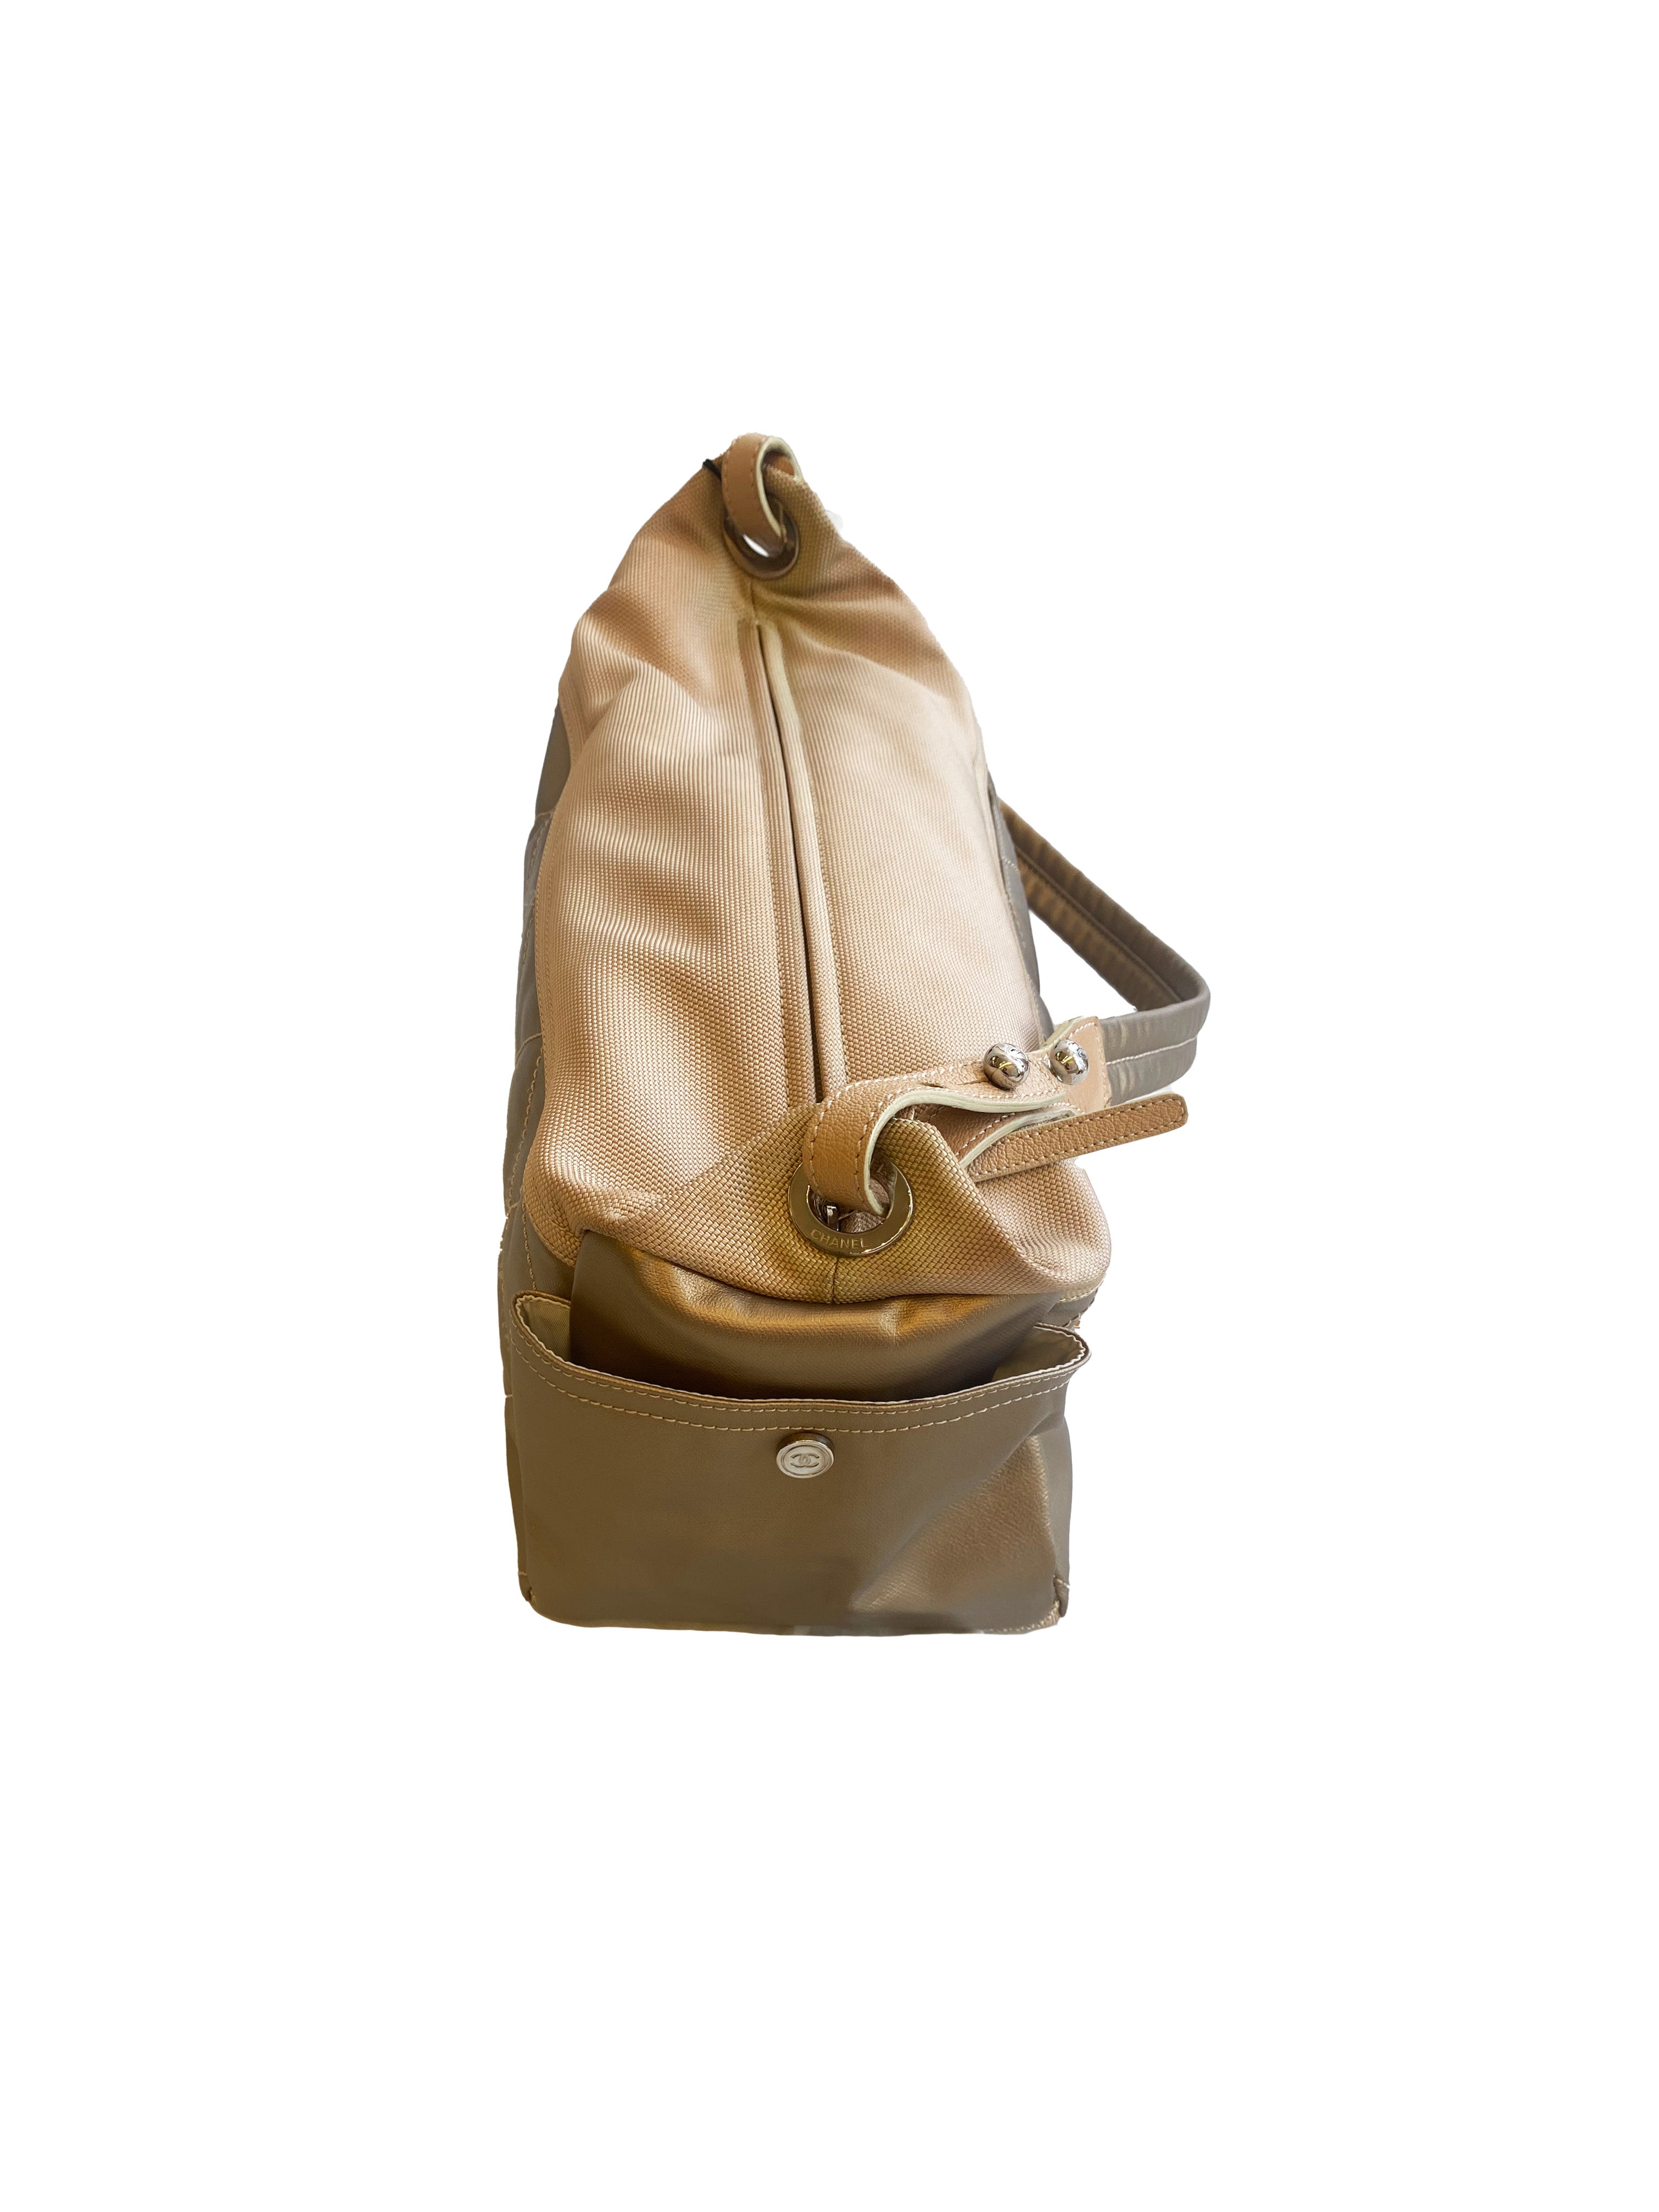 Chanel 2006 Brown Vip Precision Shoulder Bag